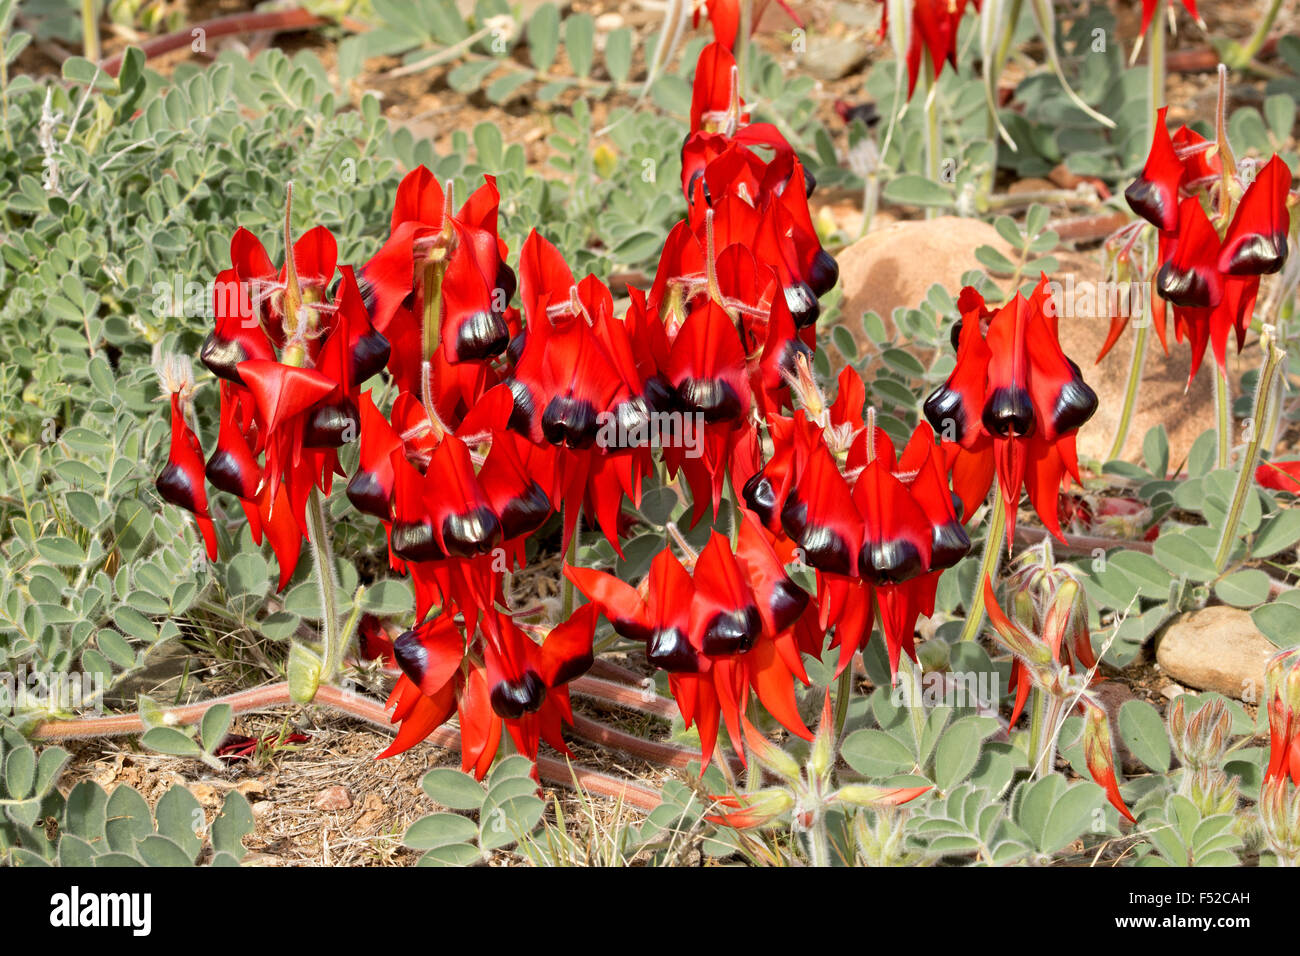 Large cluster of vivid red flowers & leaves of Sturt's desert pea Swainsona formosa in Flinders Ranges in outback Australia Stock Photo